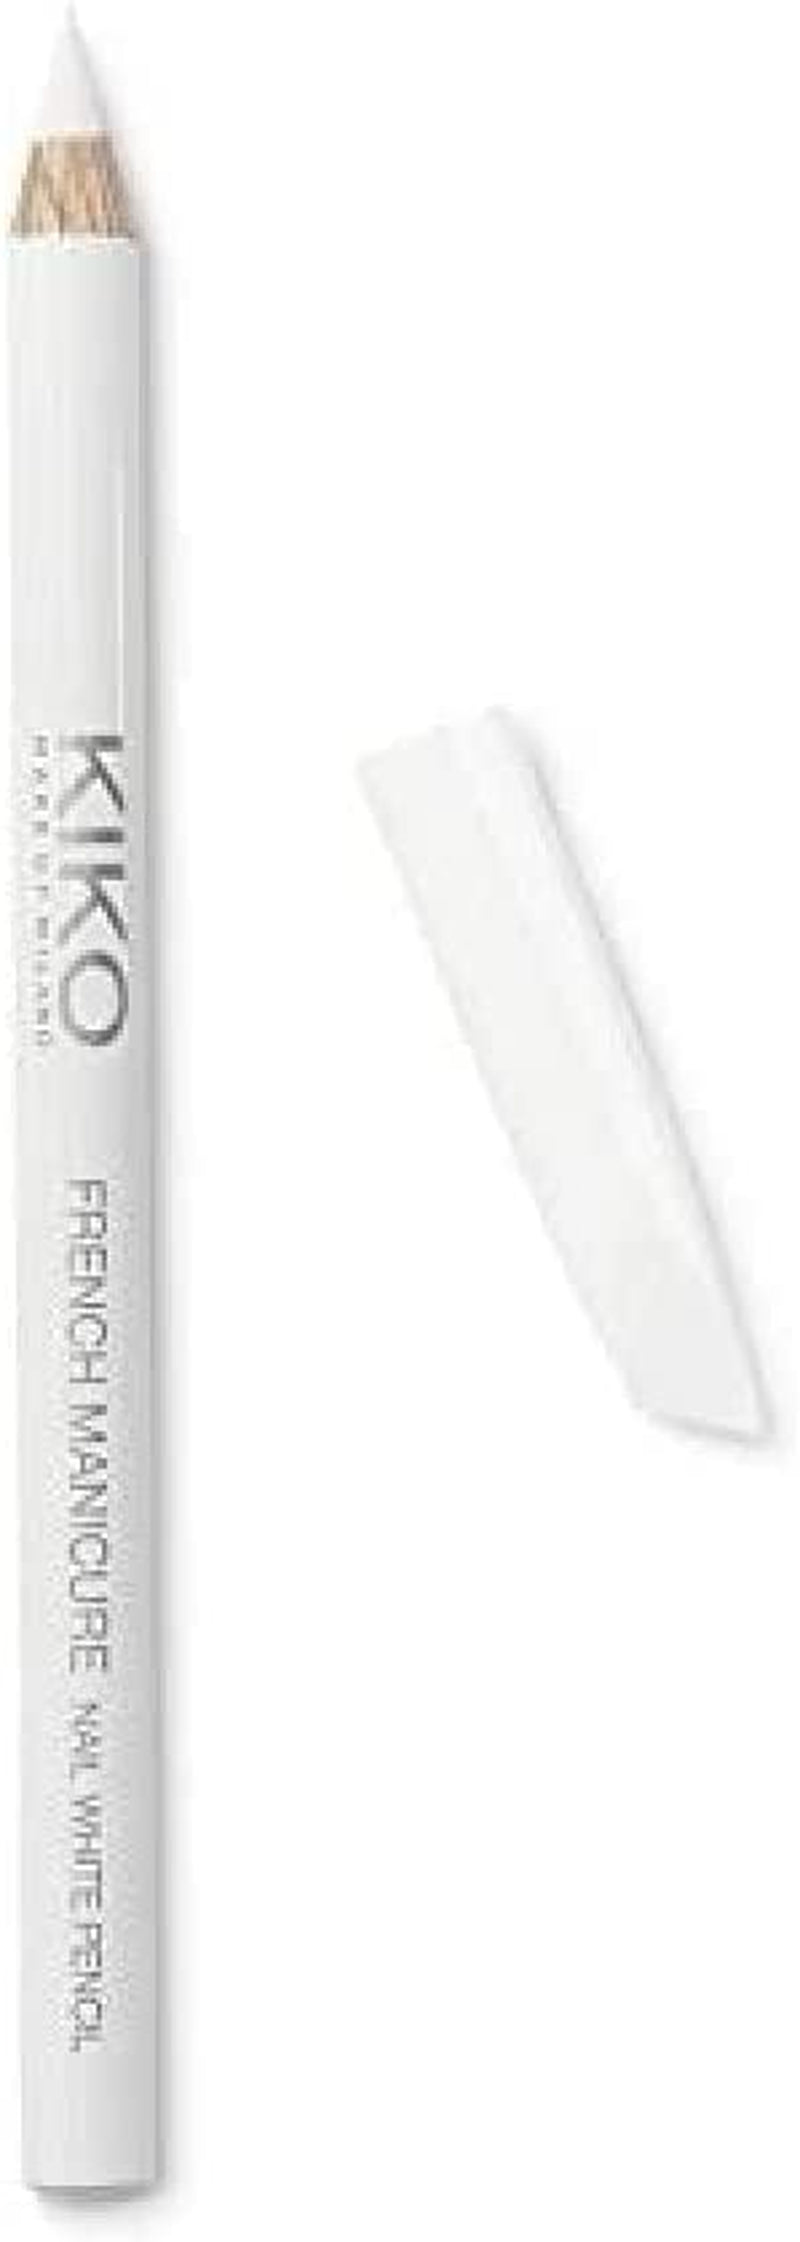 KIKO Milano French Manicure White Pencil | White Pencil for Nail Tips